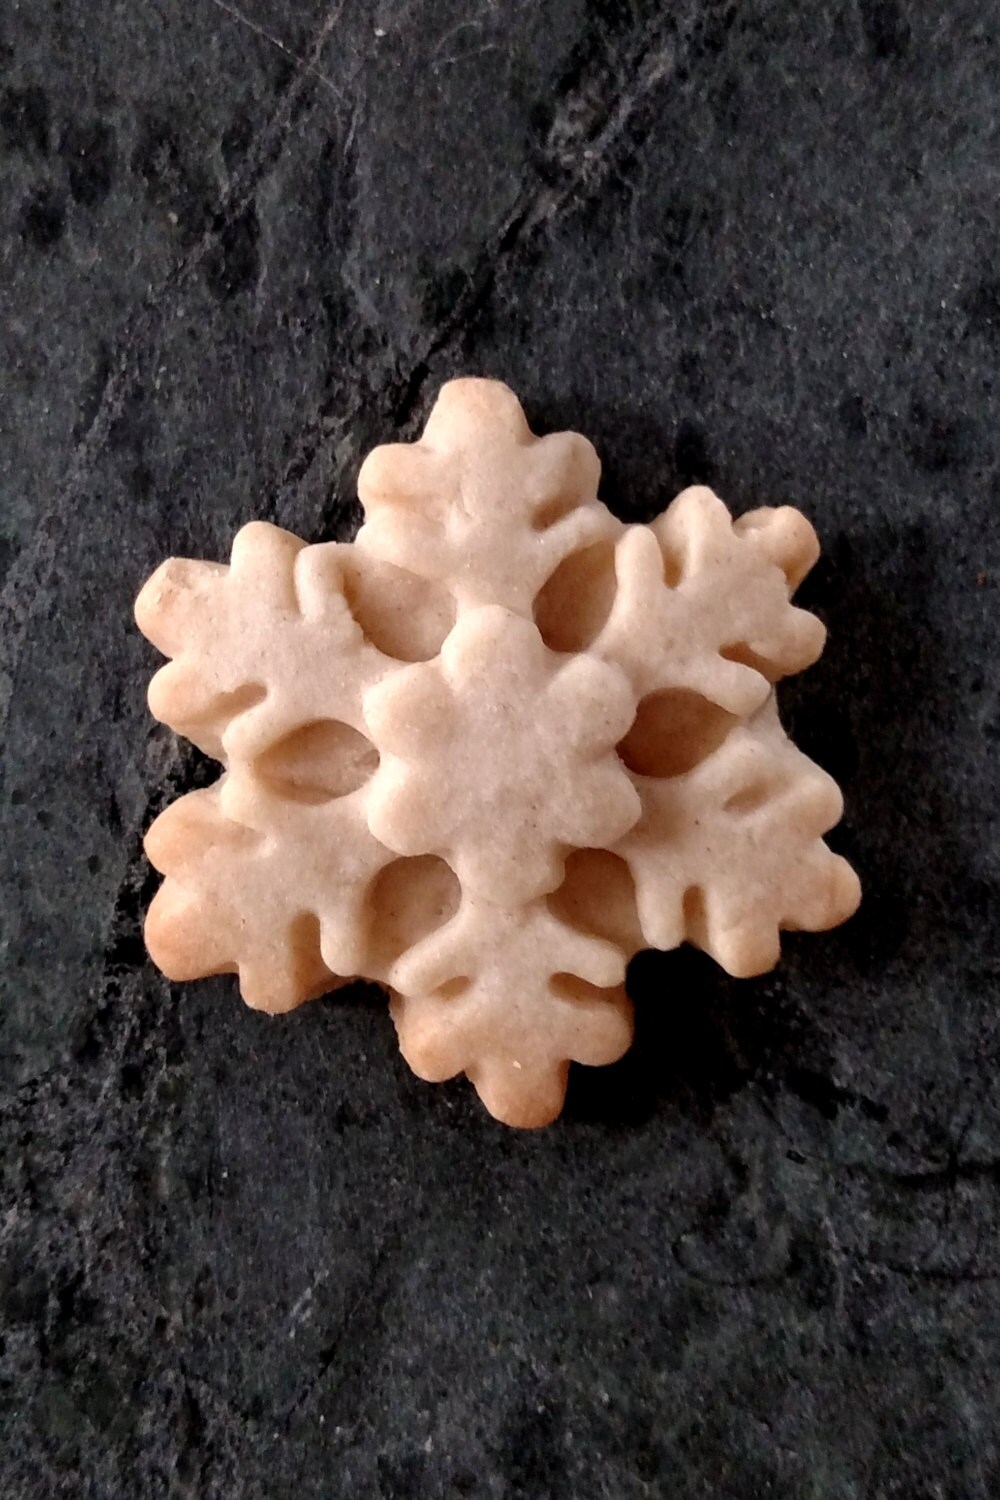 Silicone Treat Mold Snowflake Sugar Cookies